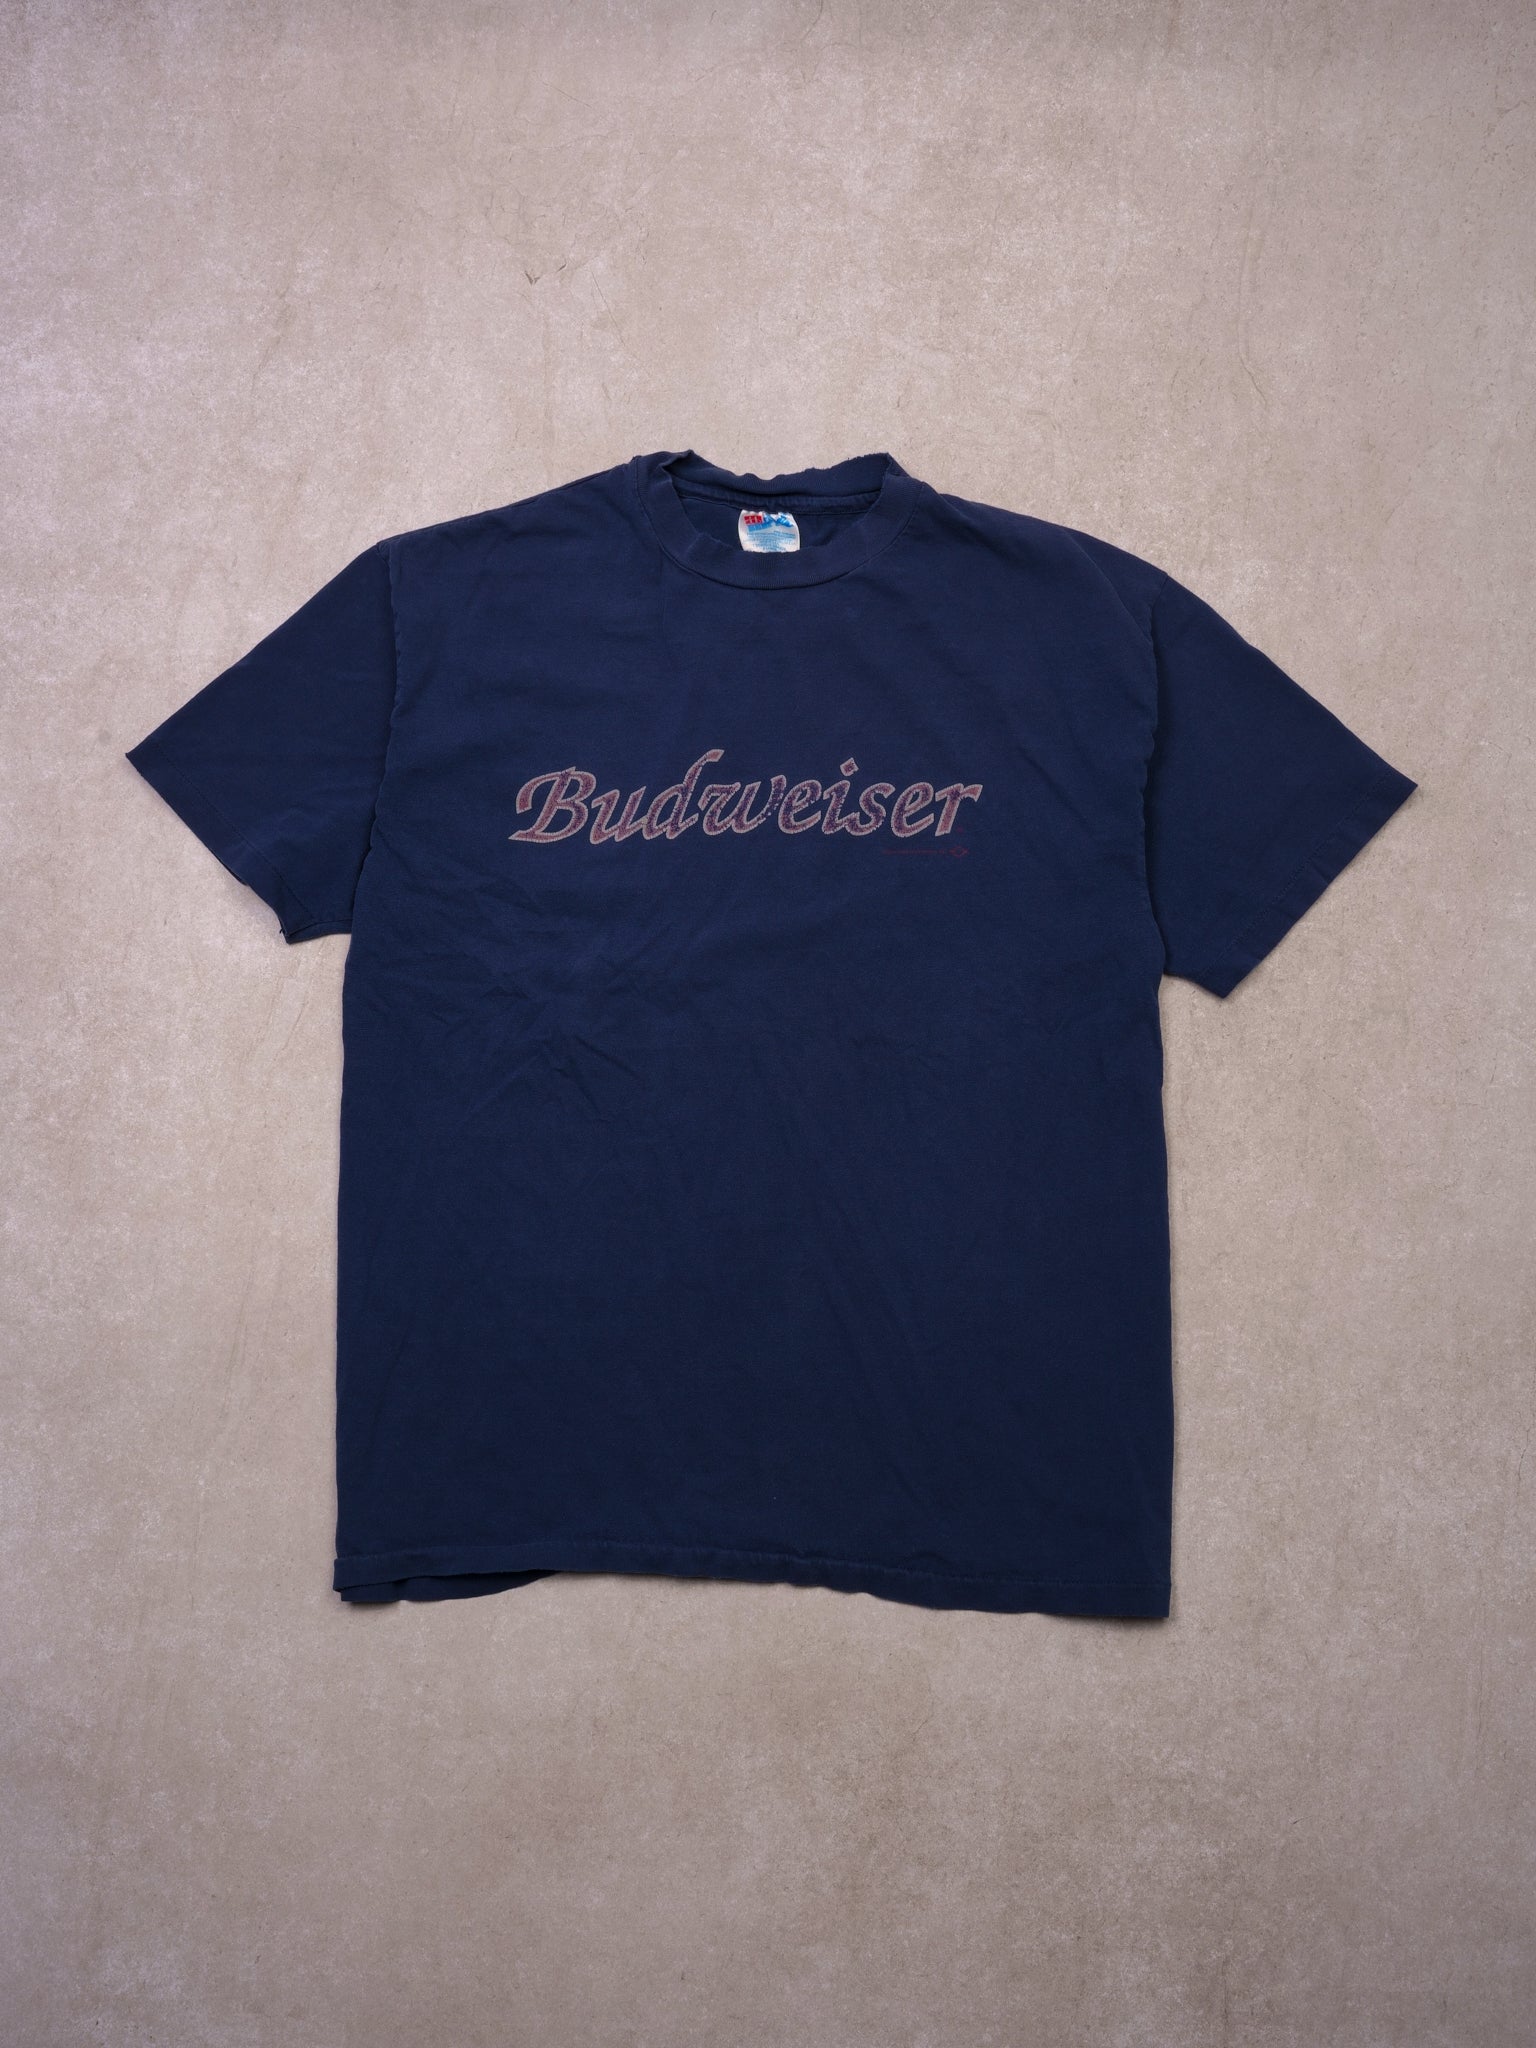 Vintage 94' Navy Blue Budweisrer Hanes Beefy Tee (M)